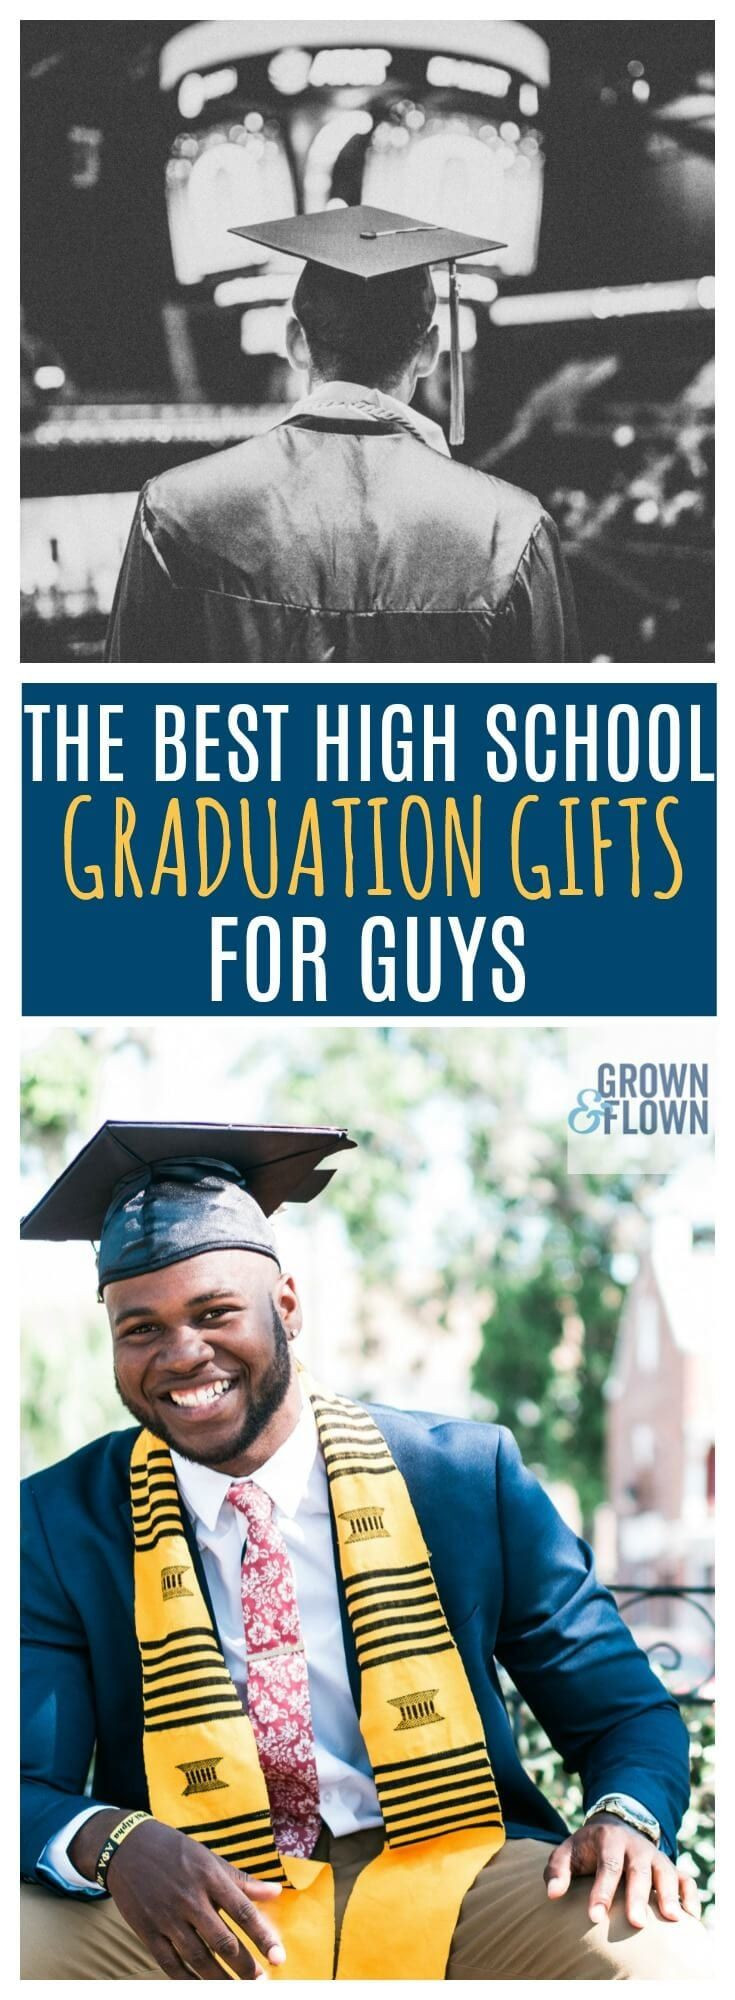 High School Graduation Gift Ideas For Him
 2020 High School Graduation Gifts for Guys They Will Love